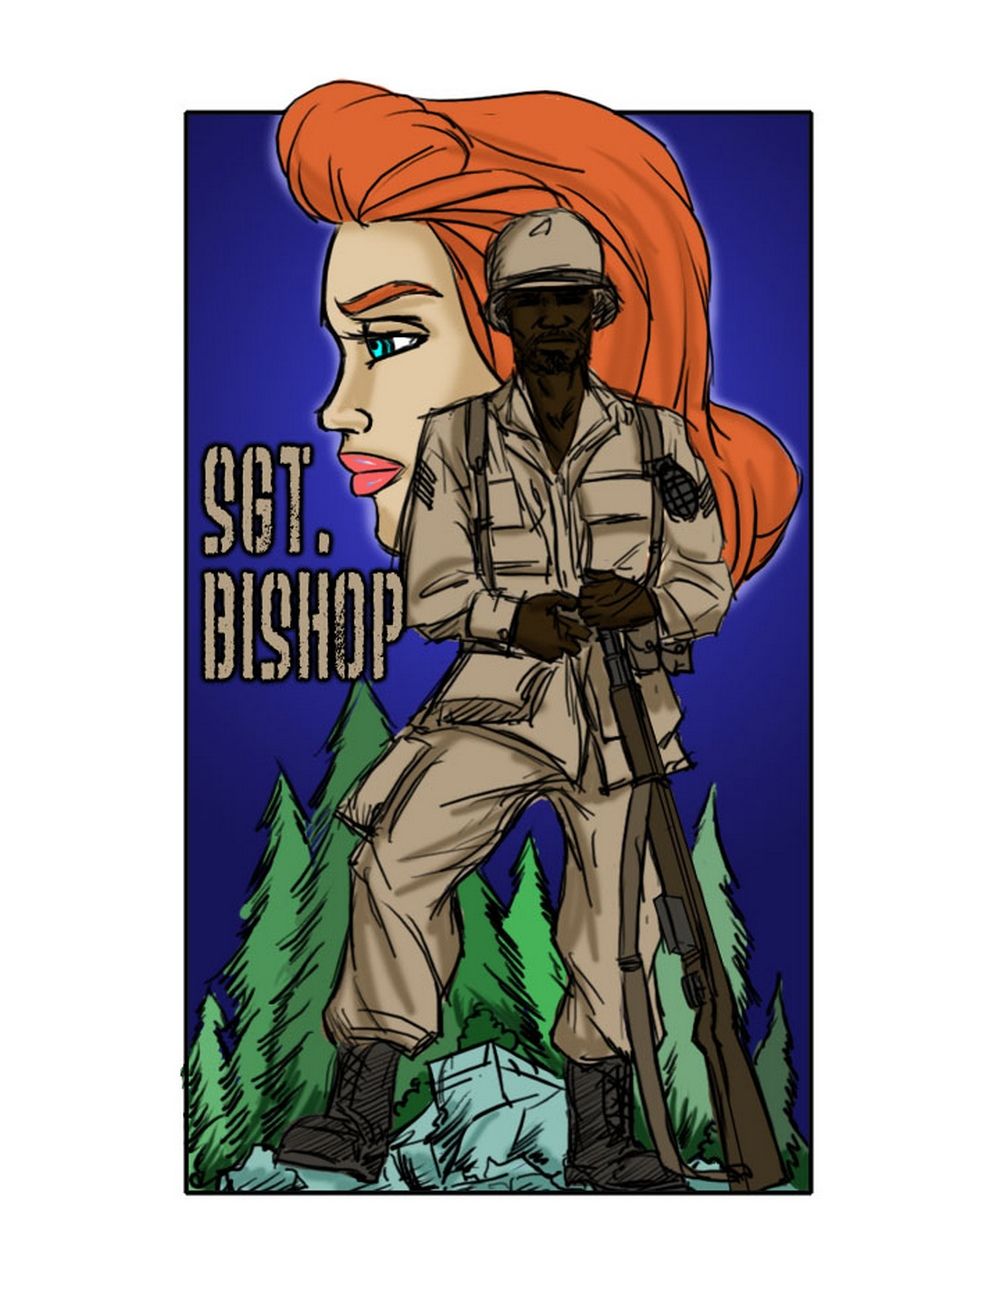 Sgt. Bishop page 1